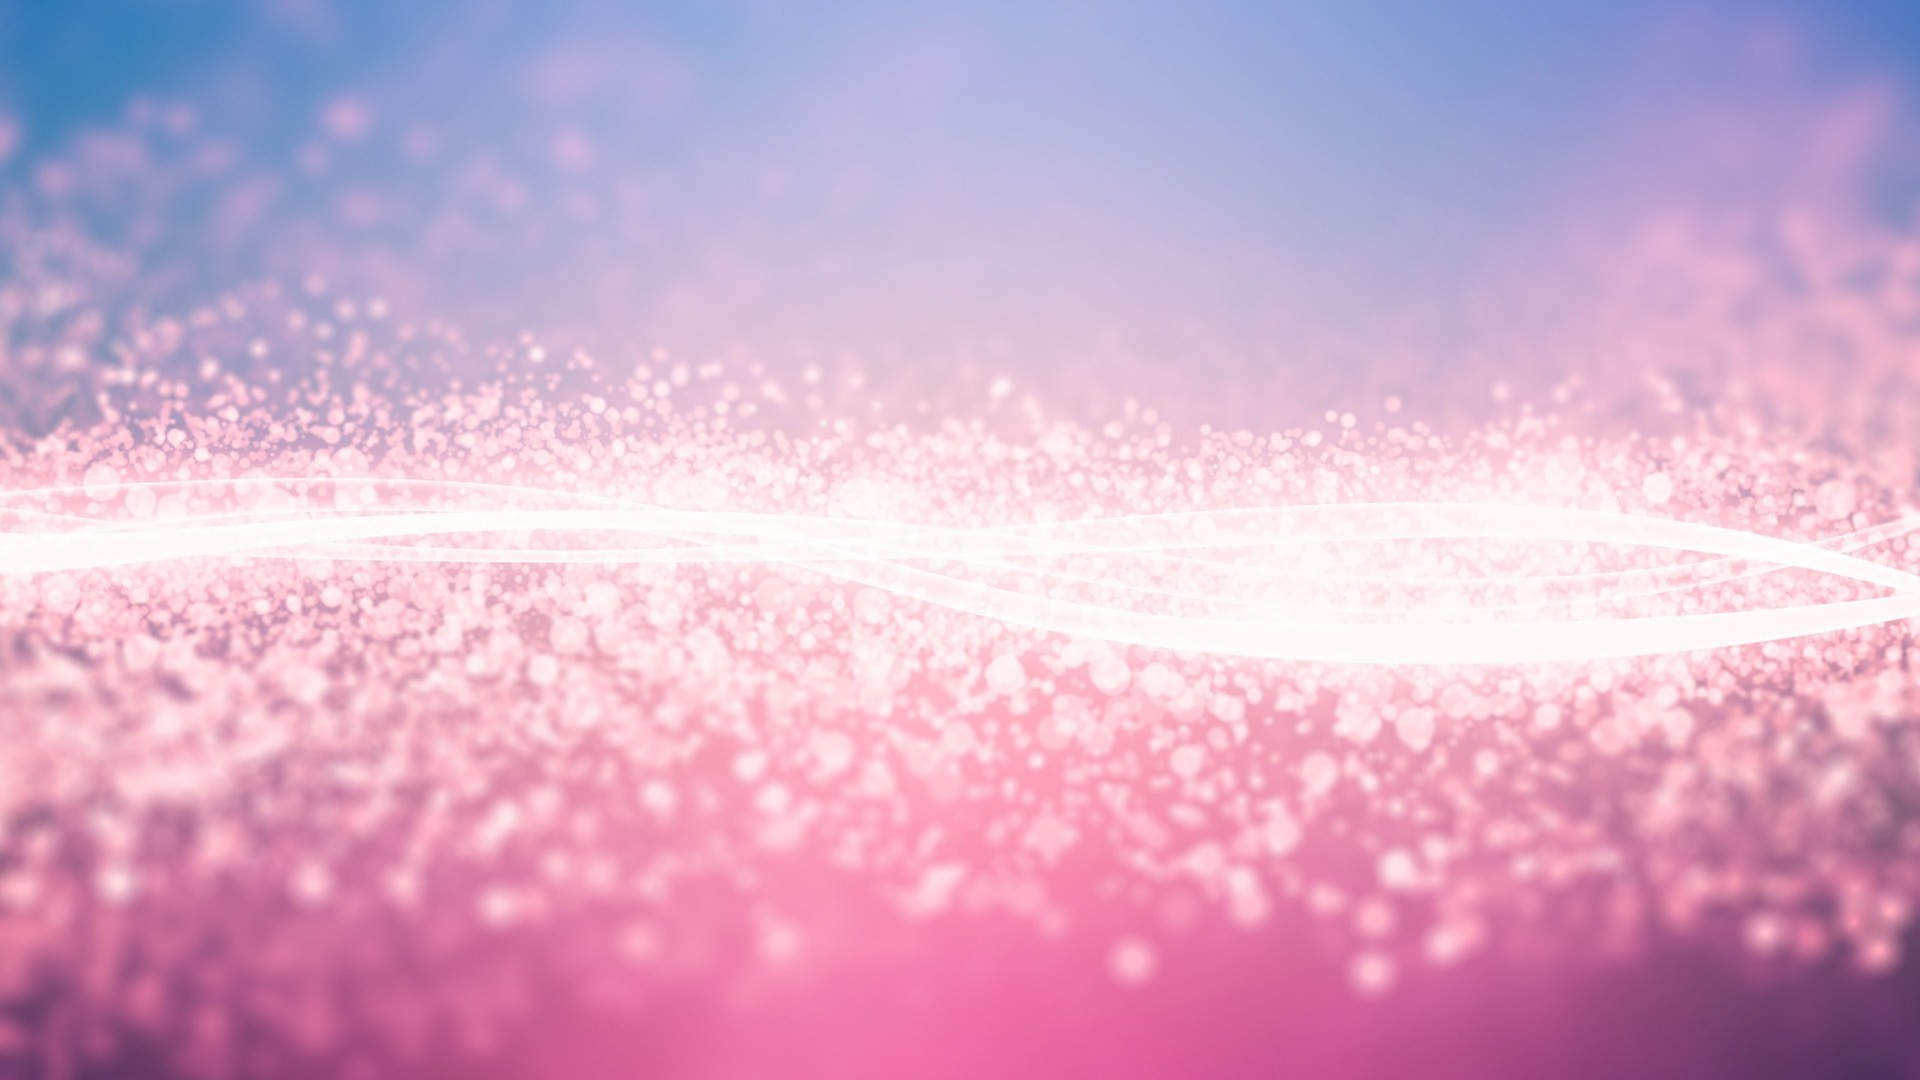 1920x1080 Muriva Sparkle Plain Glitter Wallpaper in Soft Pink 601530